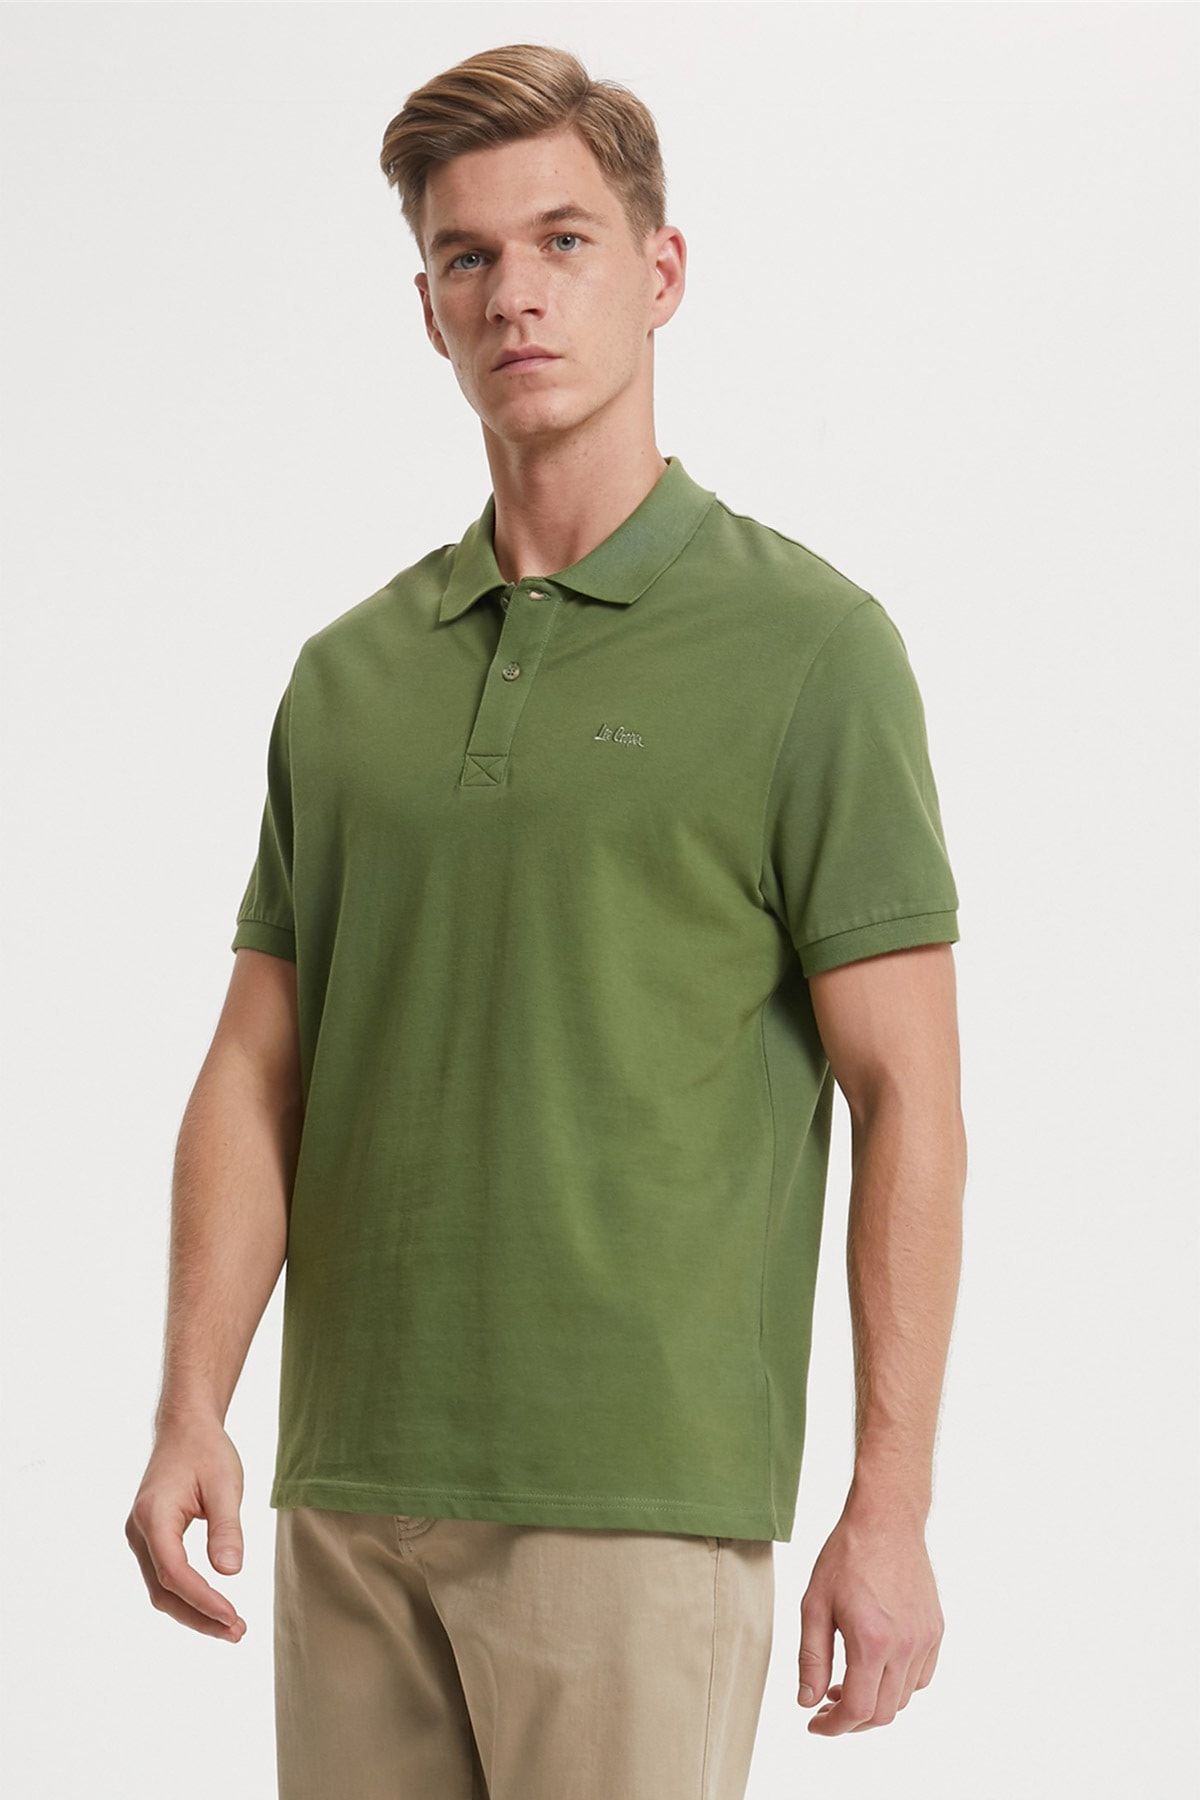 Lee Cooper Erkek Twins Pike Polo Yaka T-Shirt Yeşil 202 LCM 242042